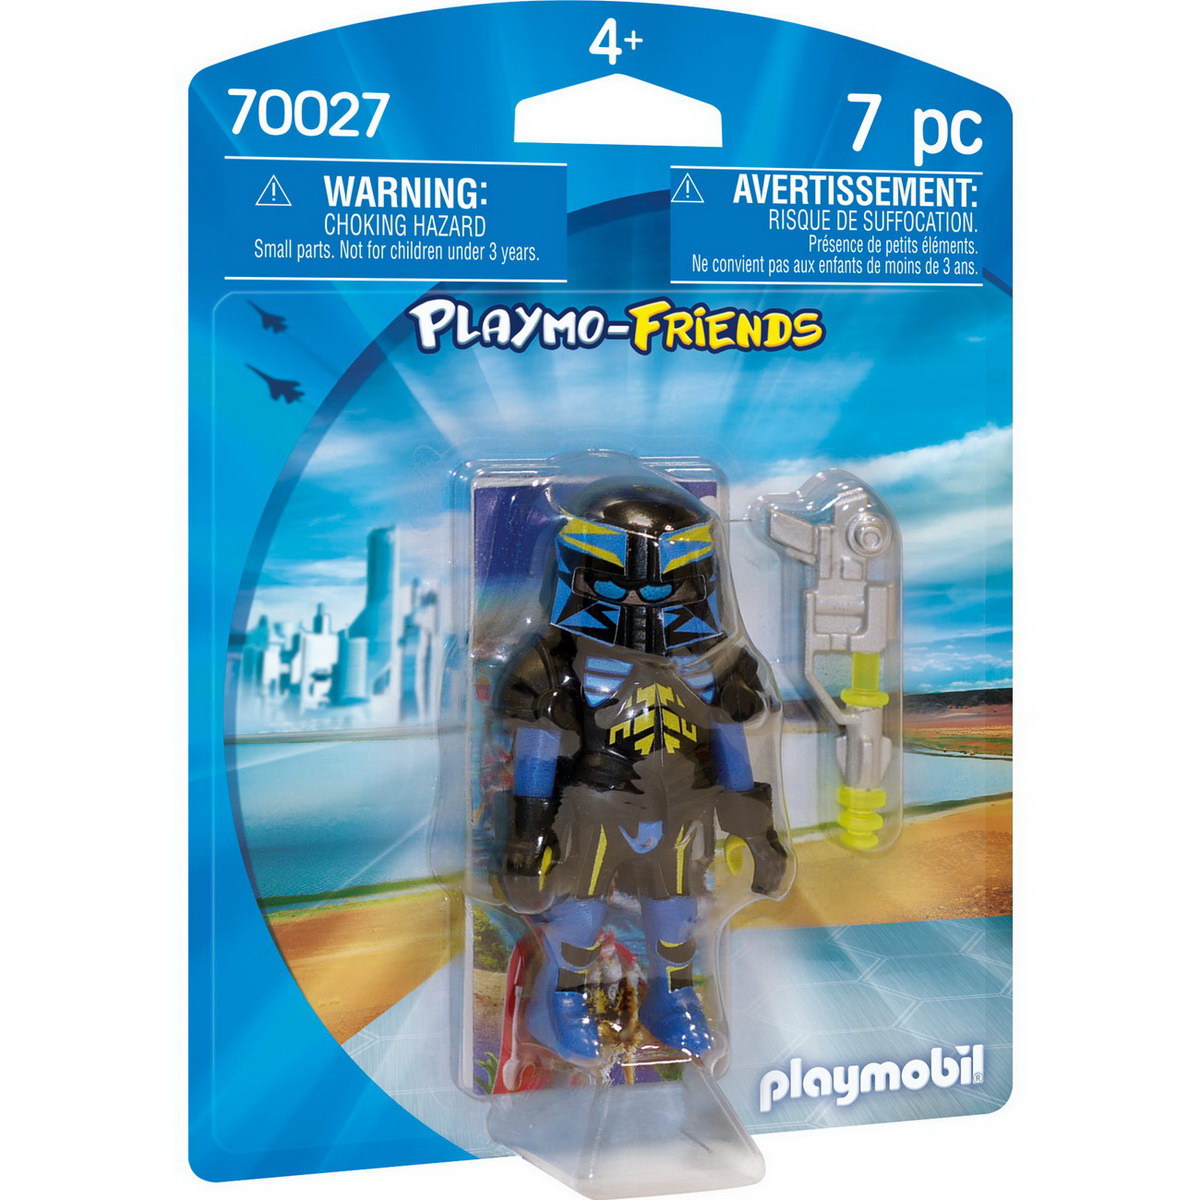 Playmobil 70027 - Weltraumagent (PLAYMO-FRIENDS)